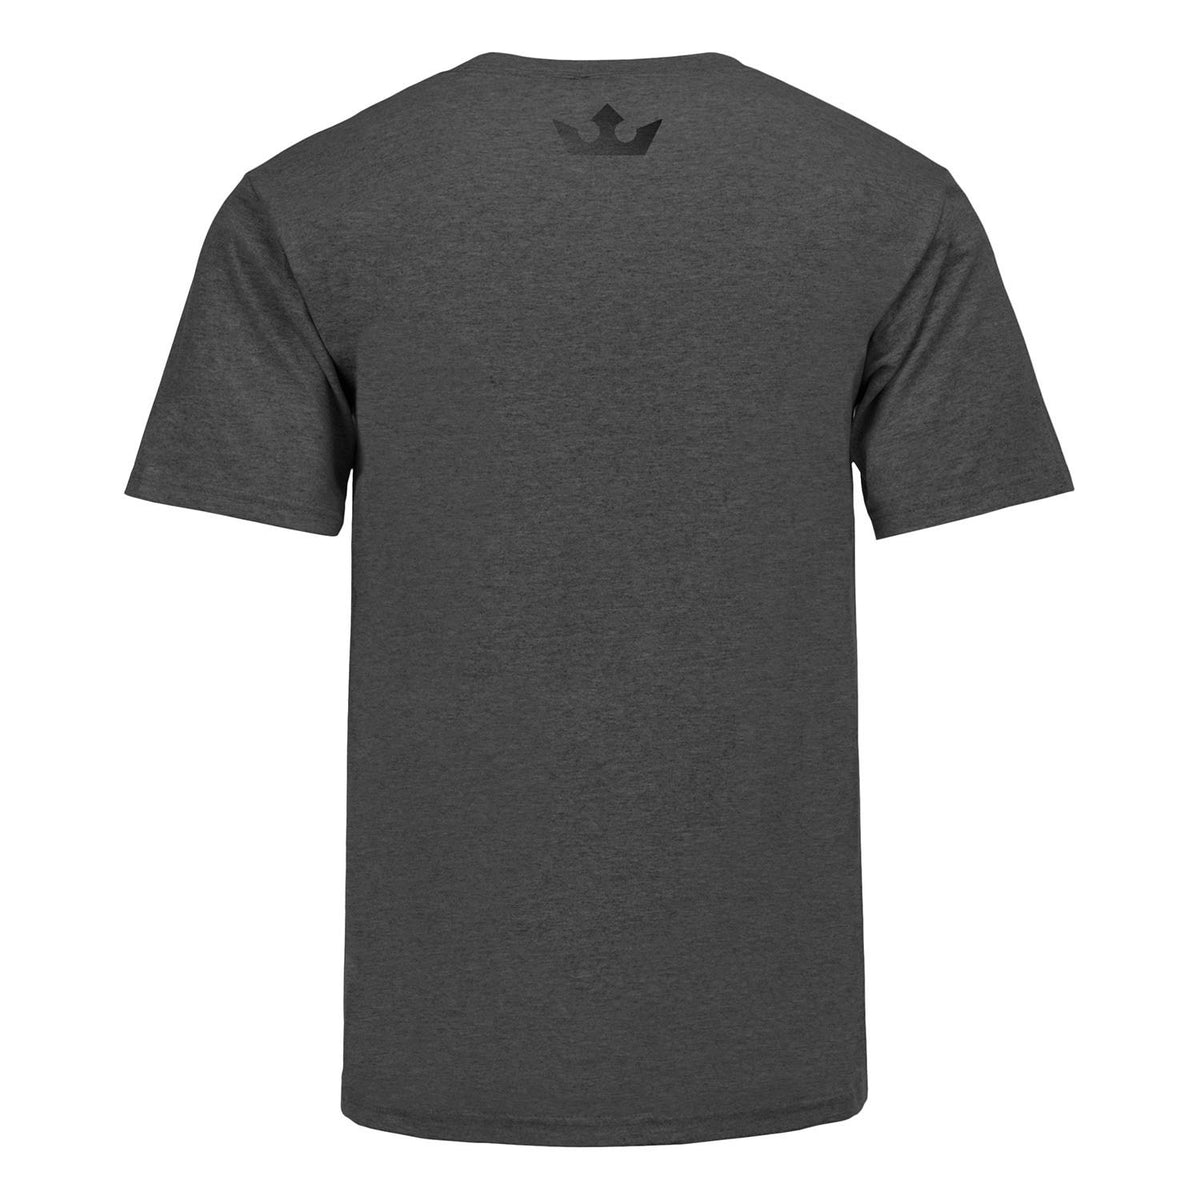 PFL Loud Left T-Shirt in Dark Grey Heather - Back View